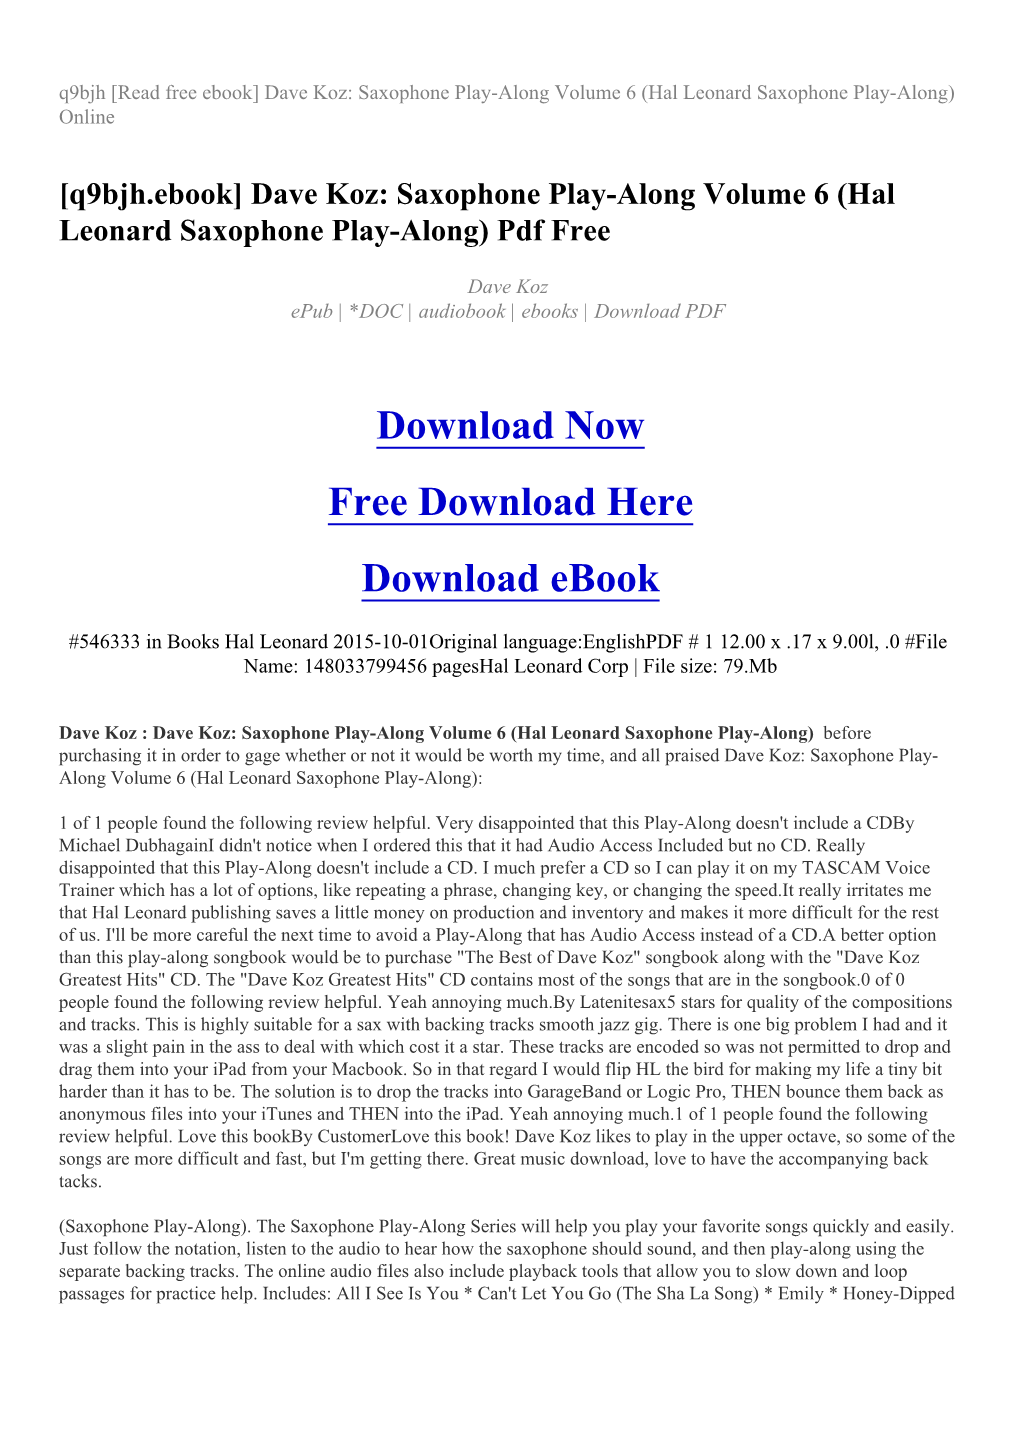 Dave Koz: Saxophone Play-Along Volume 6 (Hal Leonard Saxophone Play-Along) Online